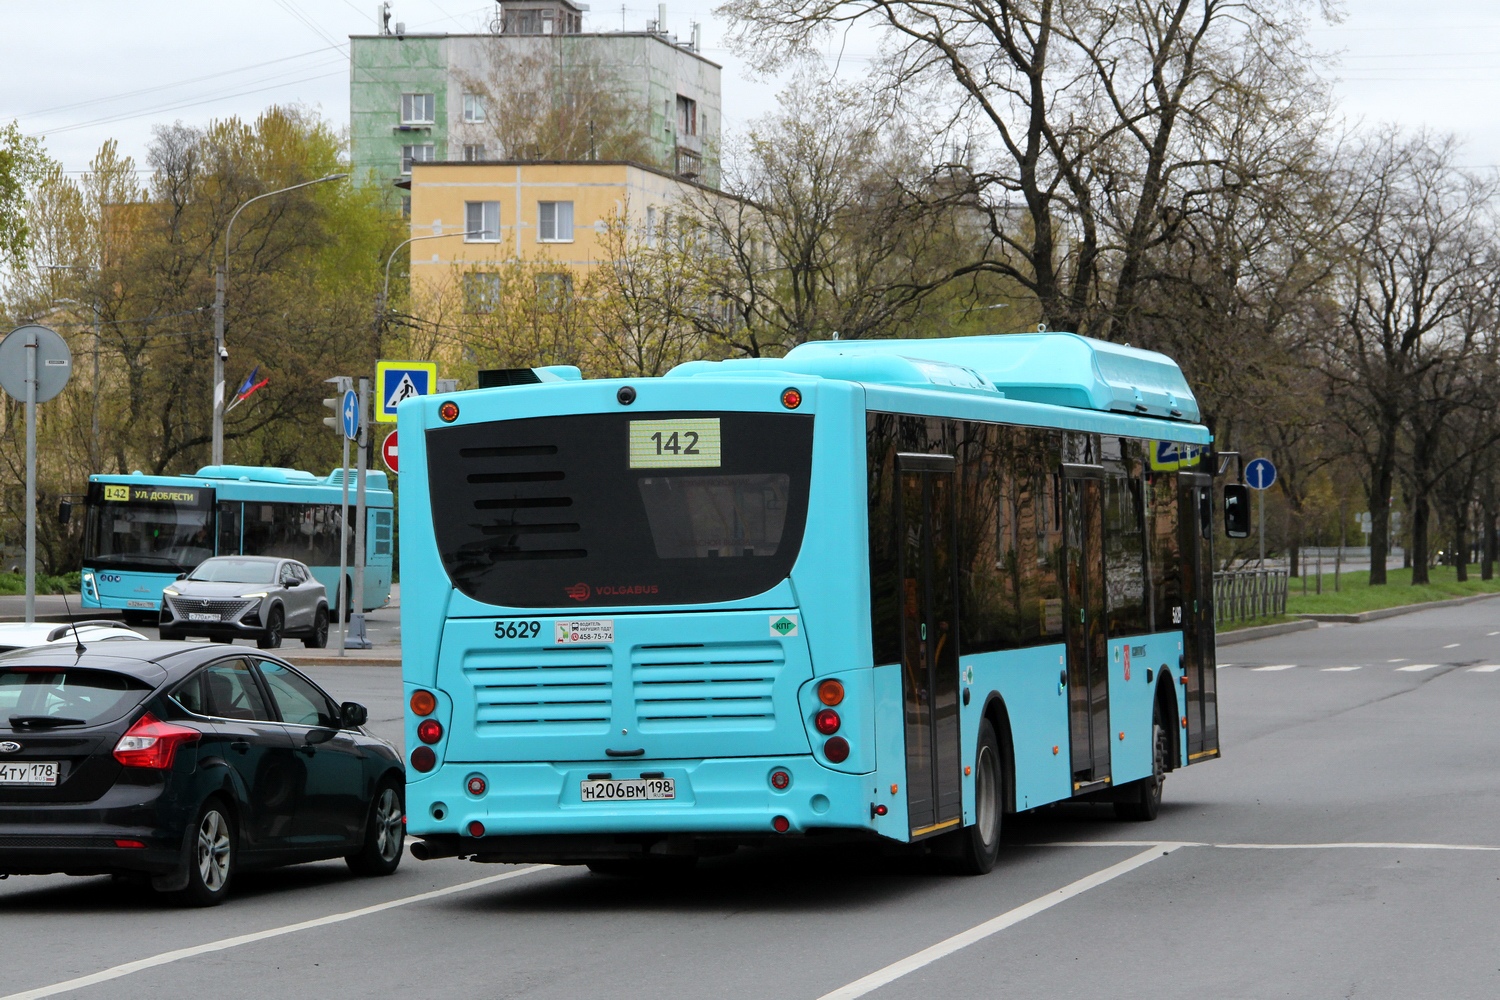 Sankt Peterburgas, Volgabus-5270.G4 (CNG) Nr. 5629